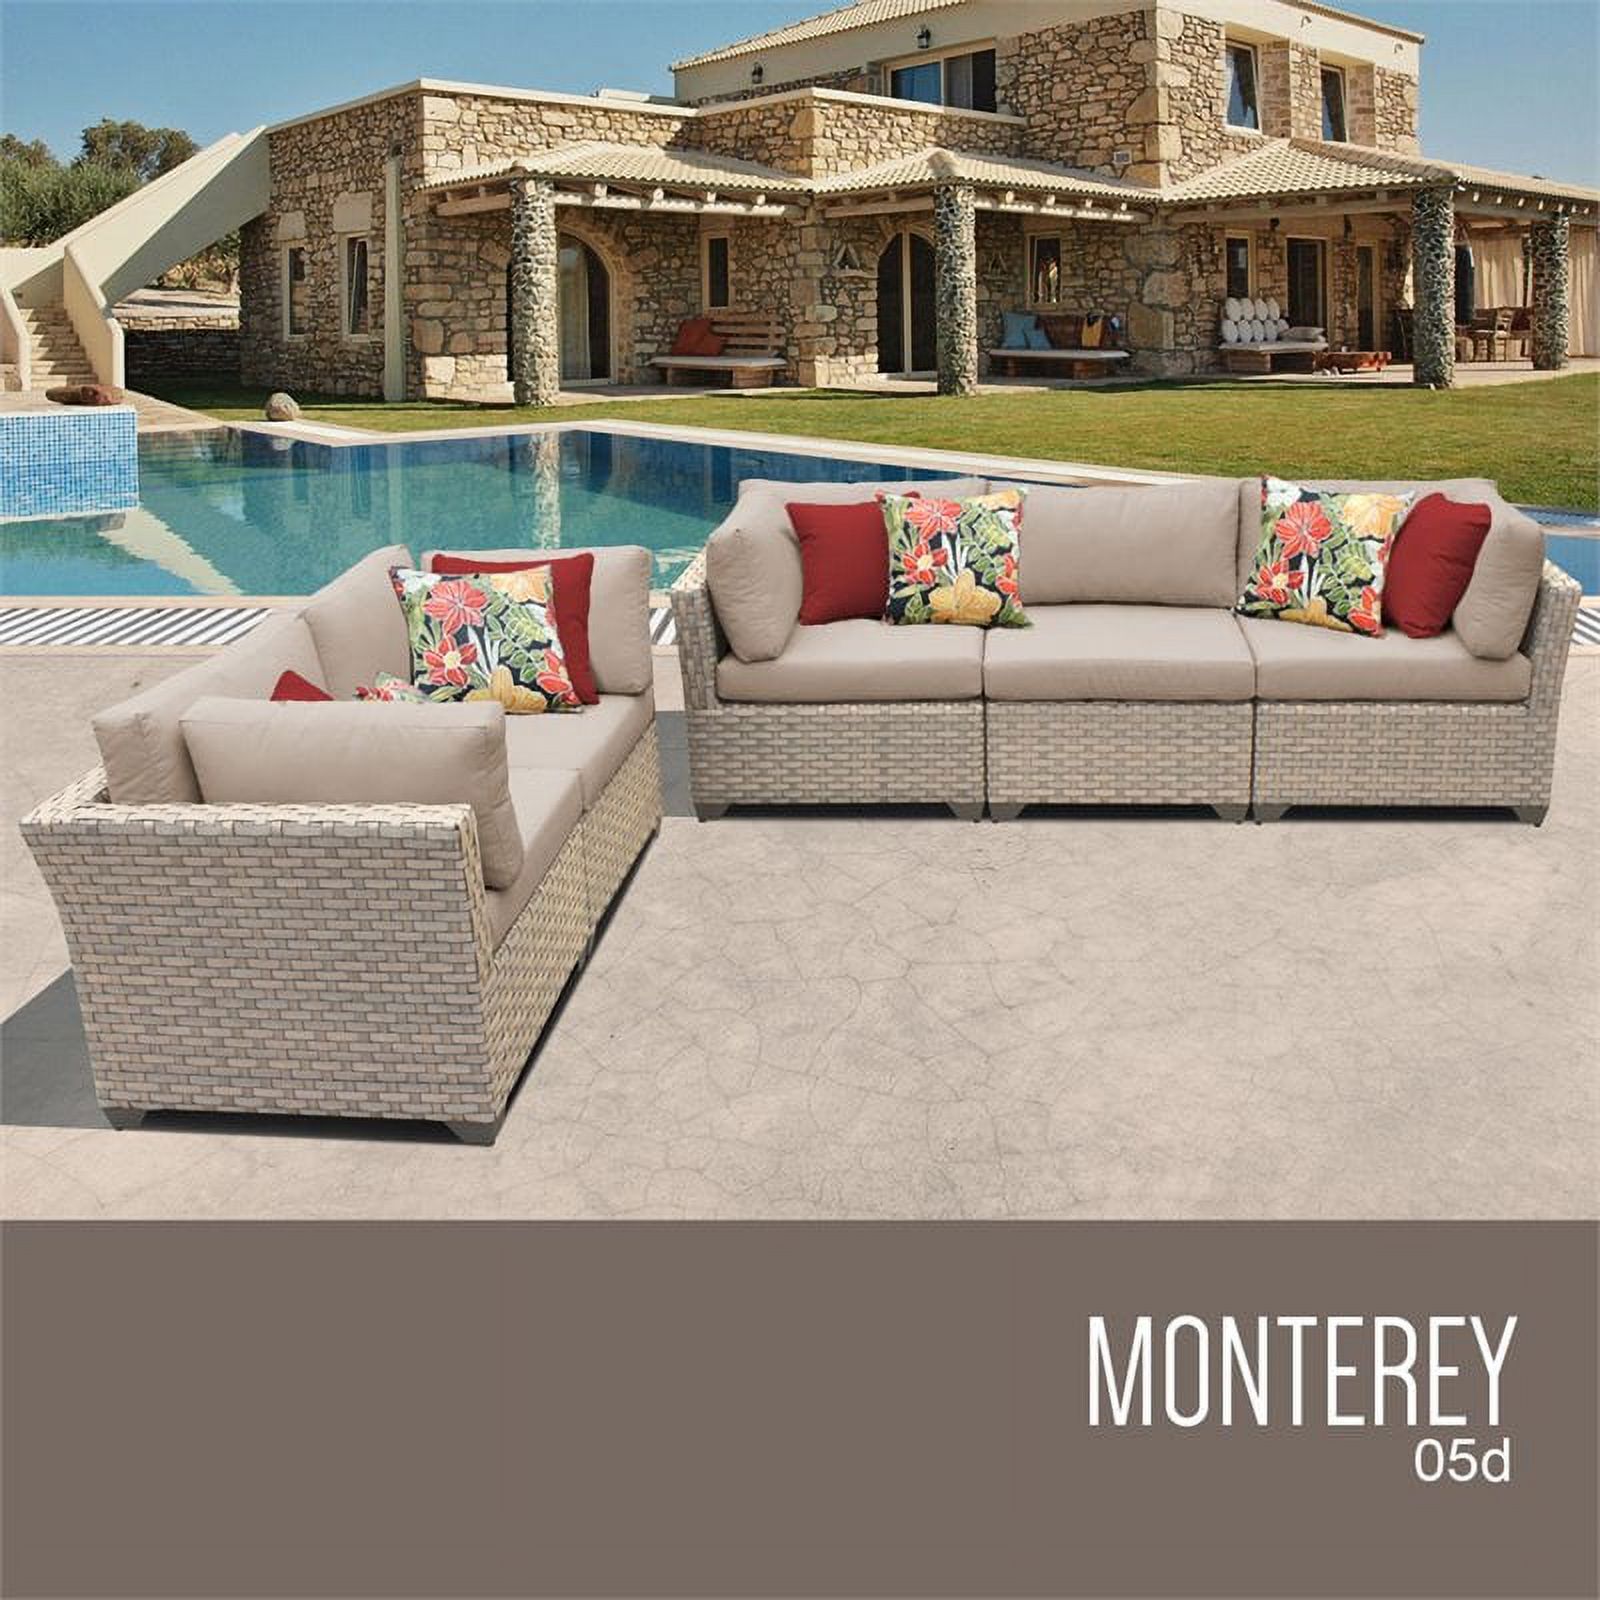 TKC Monterey 5 Piece Patio Wicker Sofa Set in Wheat - image 1 of 2